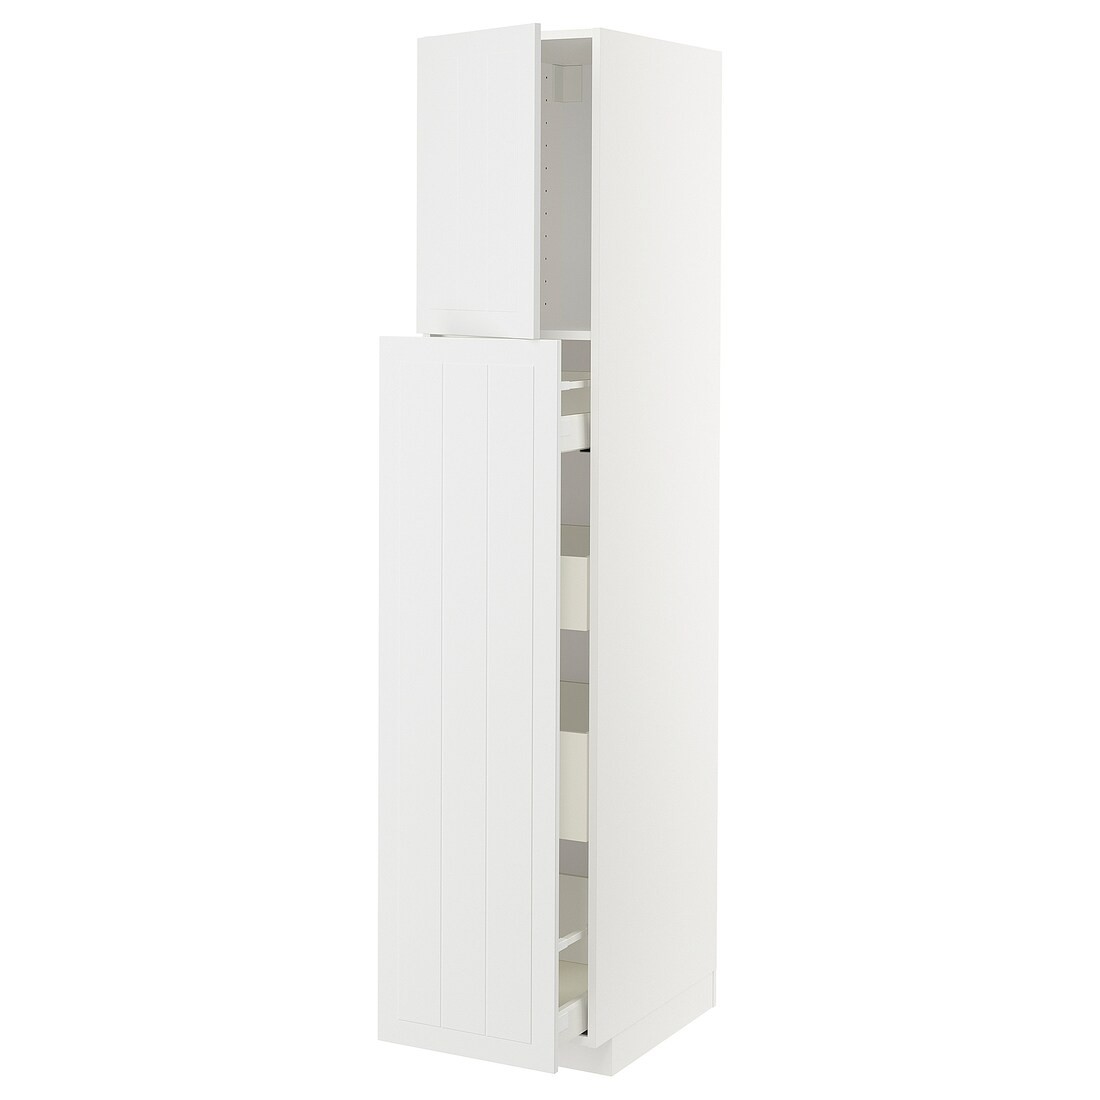 IKEA METOD МЕТОД / MAXIMERA МАКСИМЕРА Высокий шкаф полки / ящики, белый / Stensund белый, 40x60x200 см 99460837 994.608.37